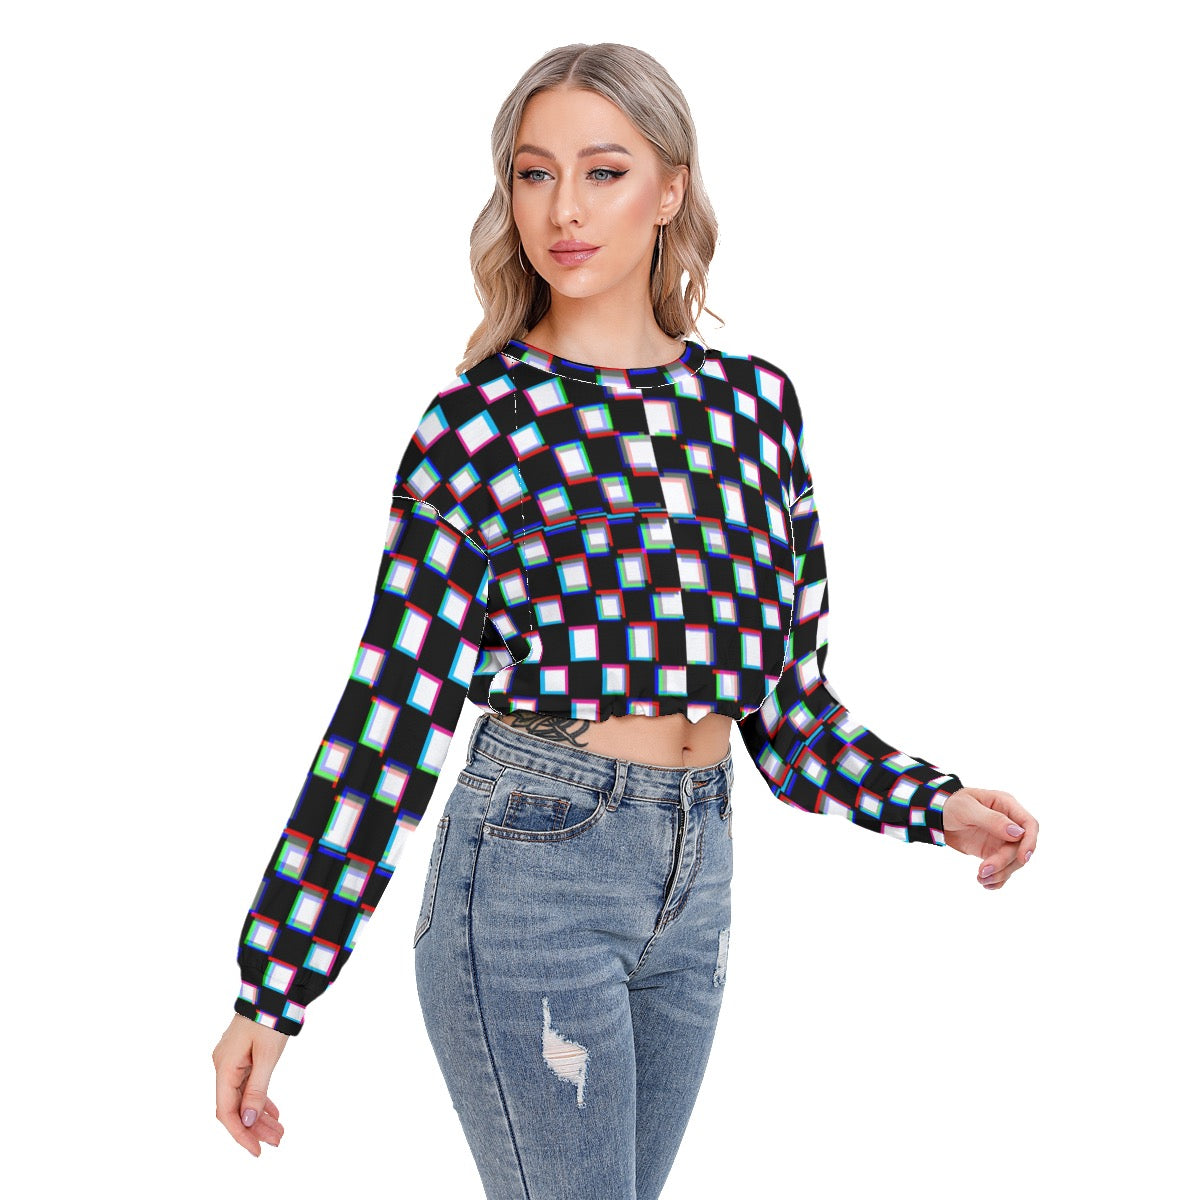 Glitch Grid Women's Long Sleeve Sweatshirt With Hem Drawstring